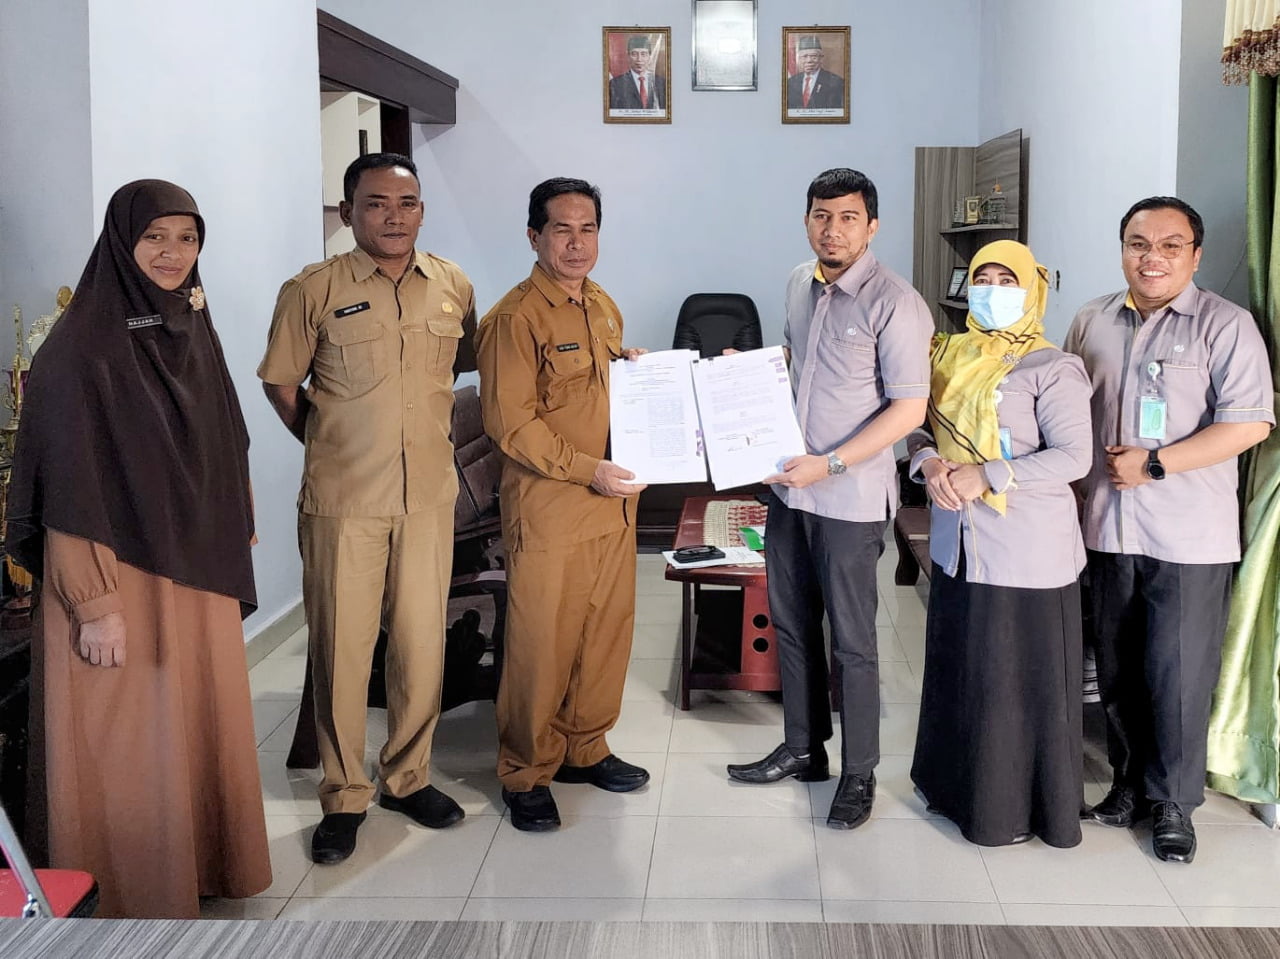 BPJS Ketenagakerjaan Aceh Tengah Dan Dinkes Bener Meriah Tandangani Perjanjian Kerjasama Kecelakaan Kerja